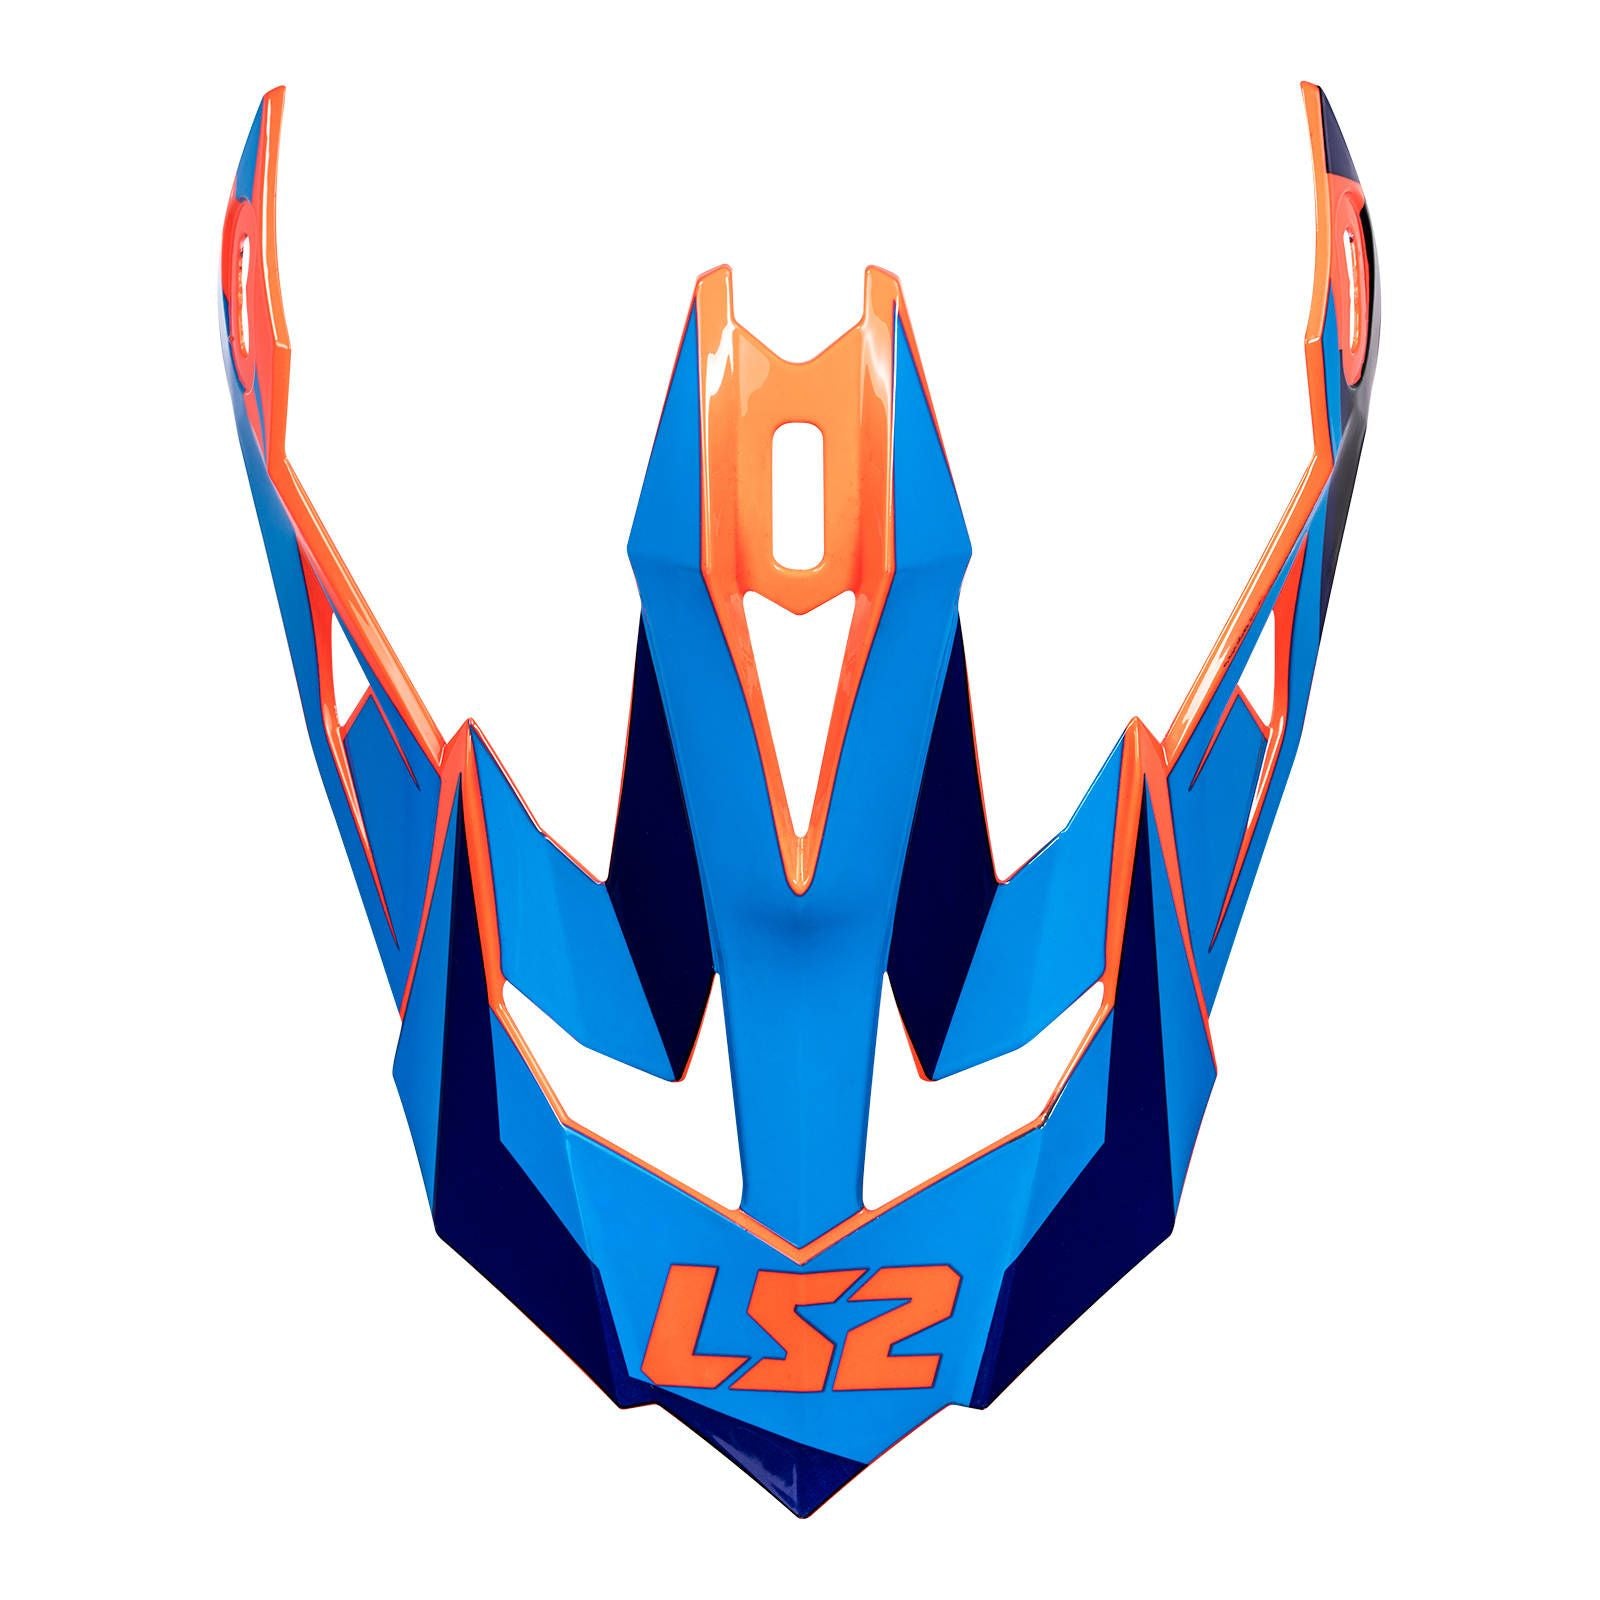 New LS2 MX470 Subverter Helmet Peak Nimble Blue / Black / Orange #LS2Z800470PK21